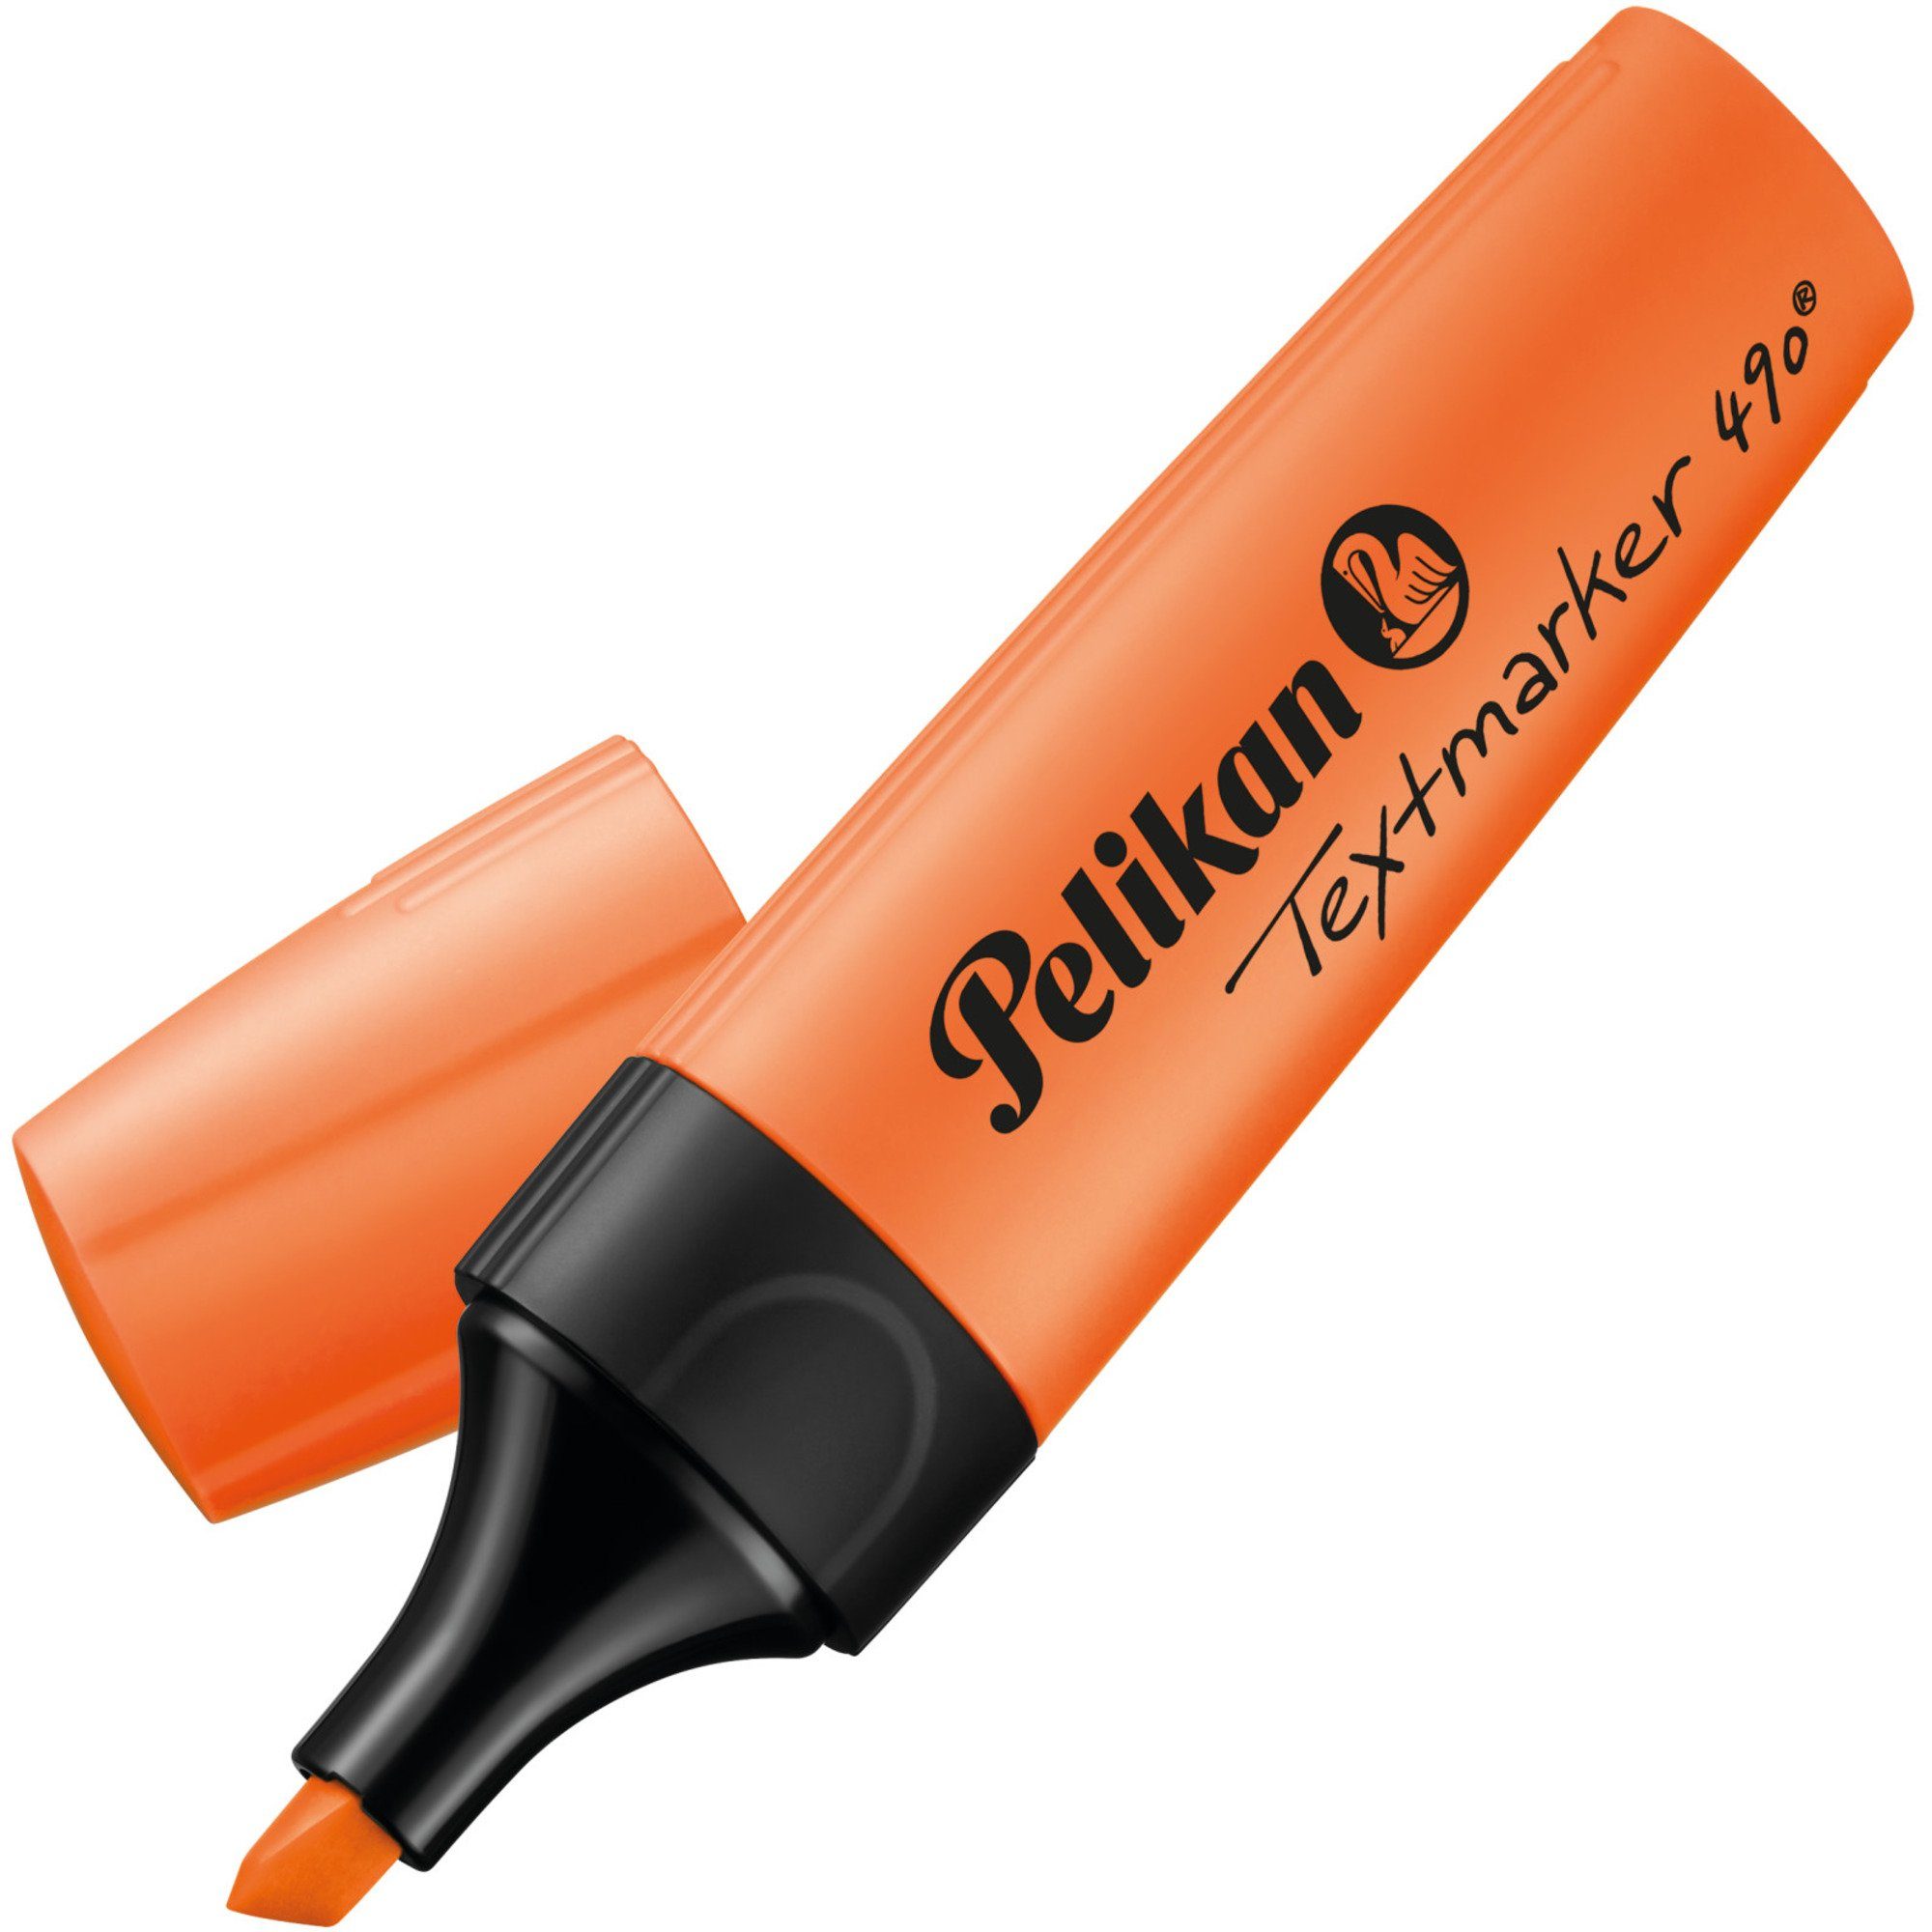 Druckkugelschreiber Leucht-Orange, Stift Pelikan 490 Pelikan Textmarker